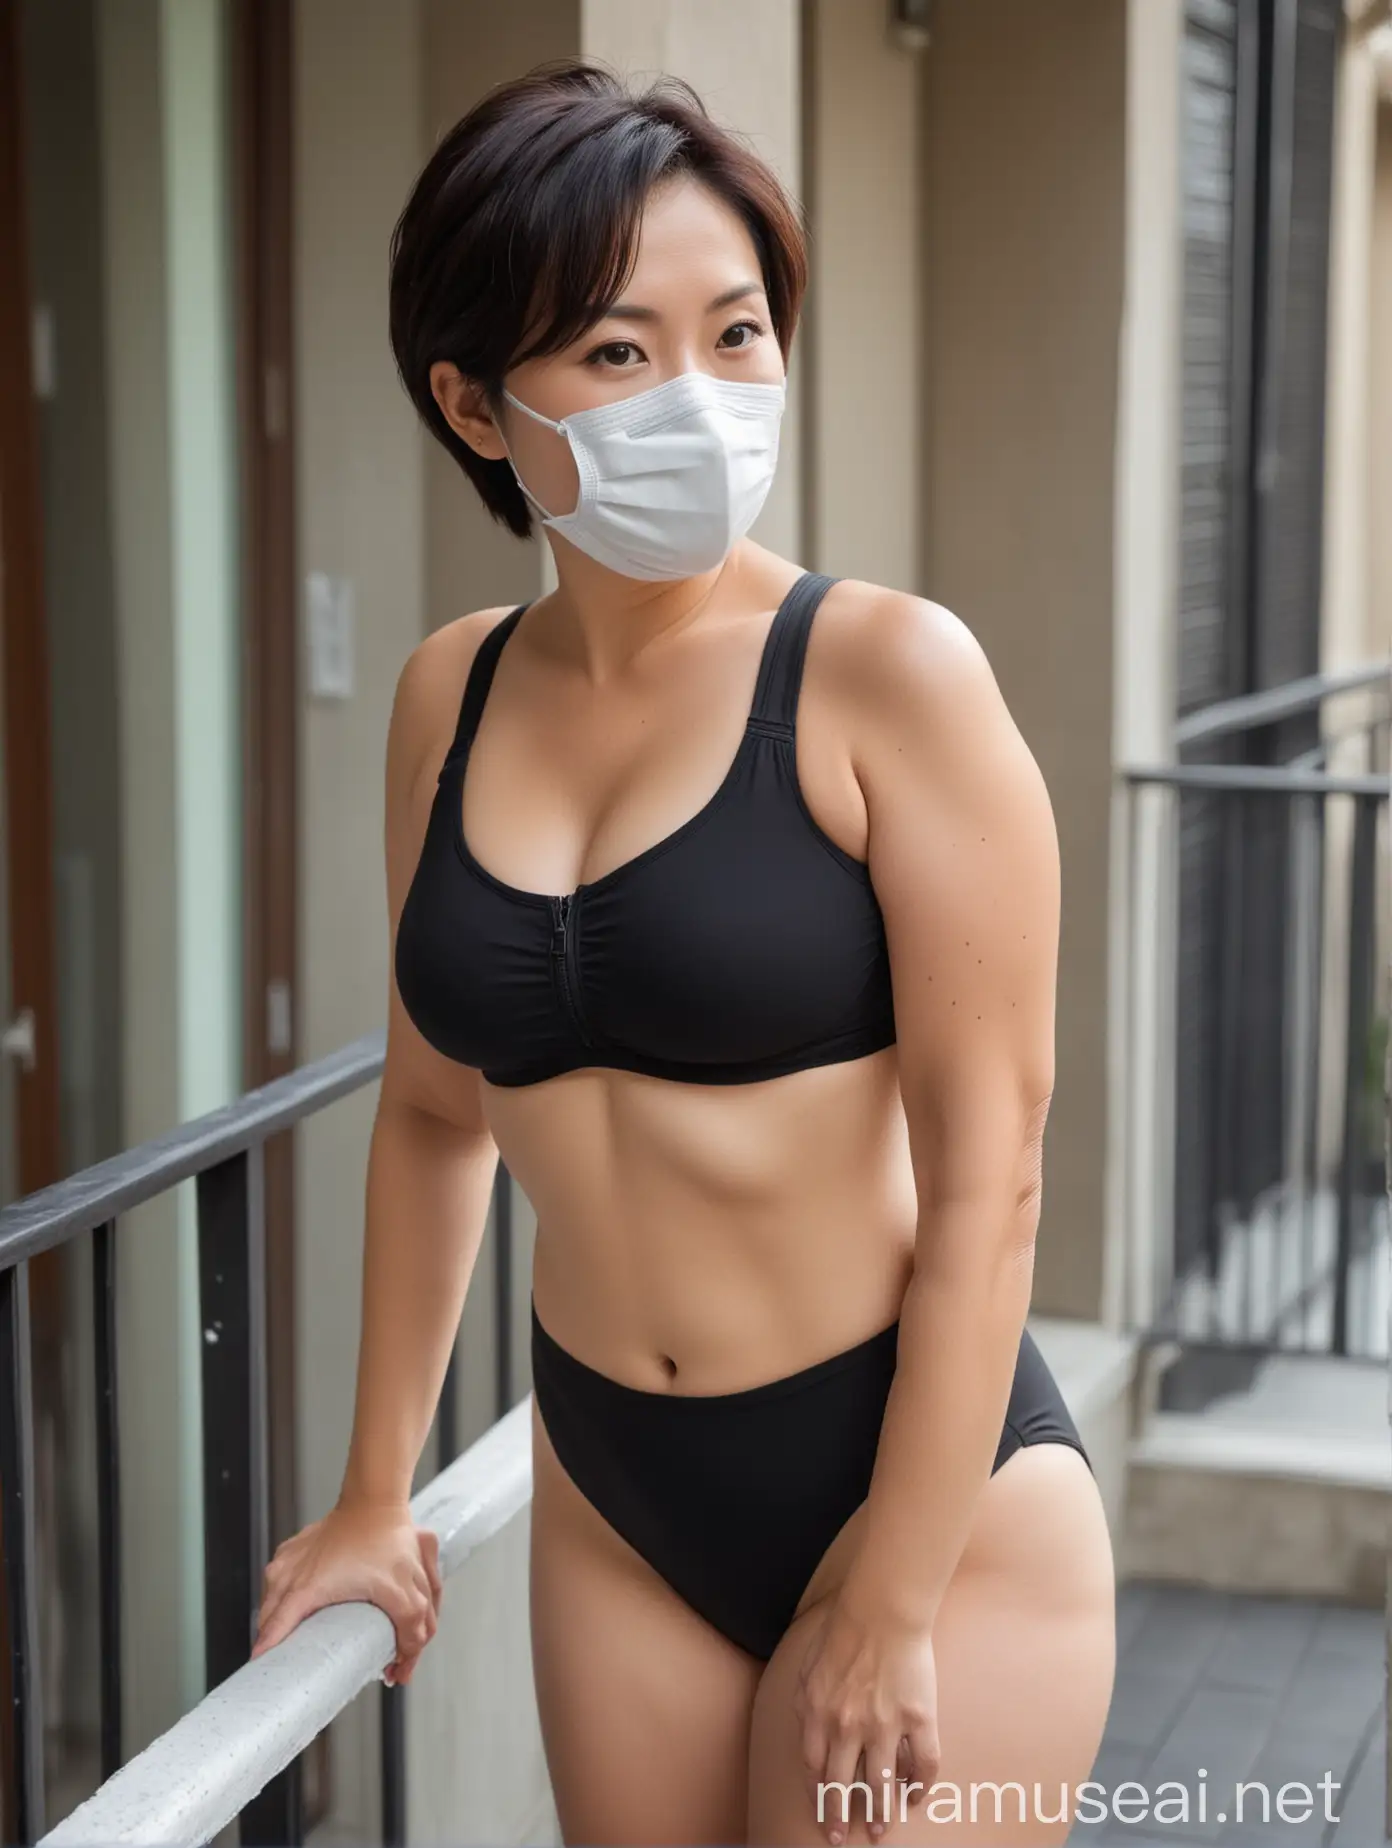 Elegant Chinese Woman with Respirator Mask Leaning on Balcony Railing